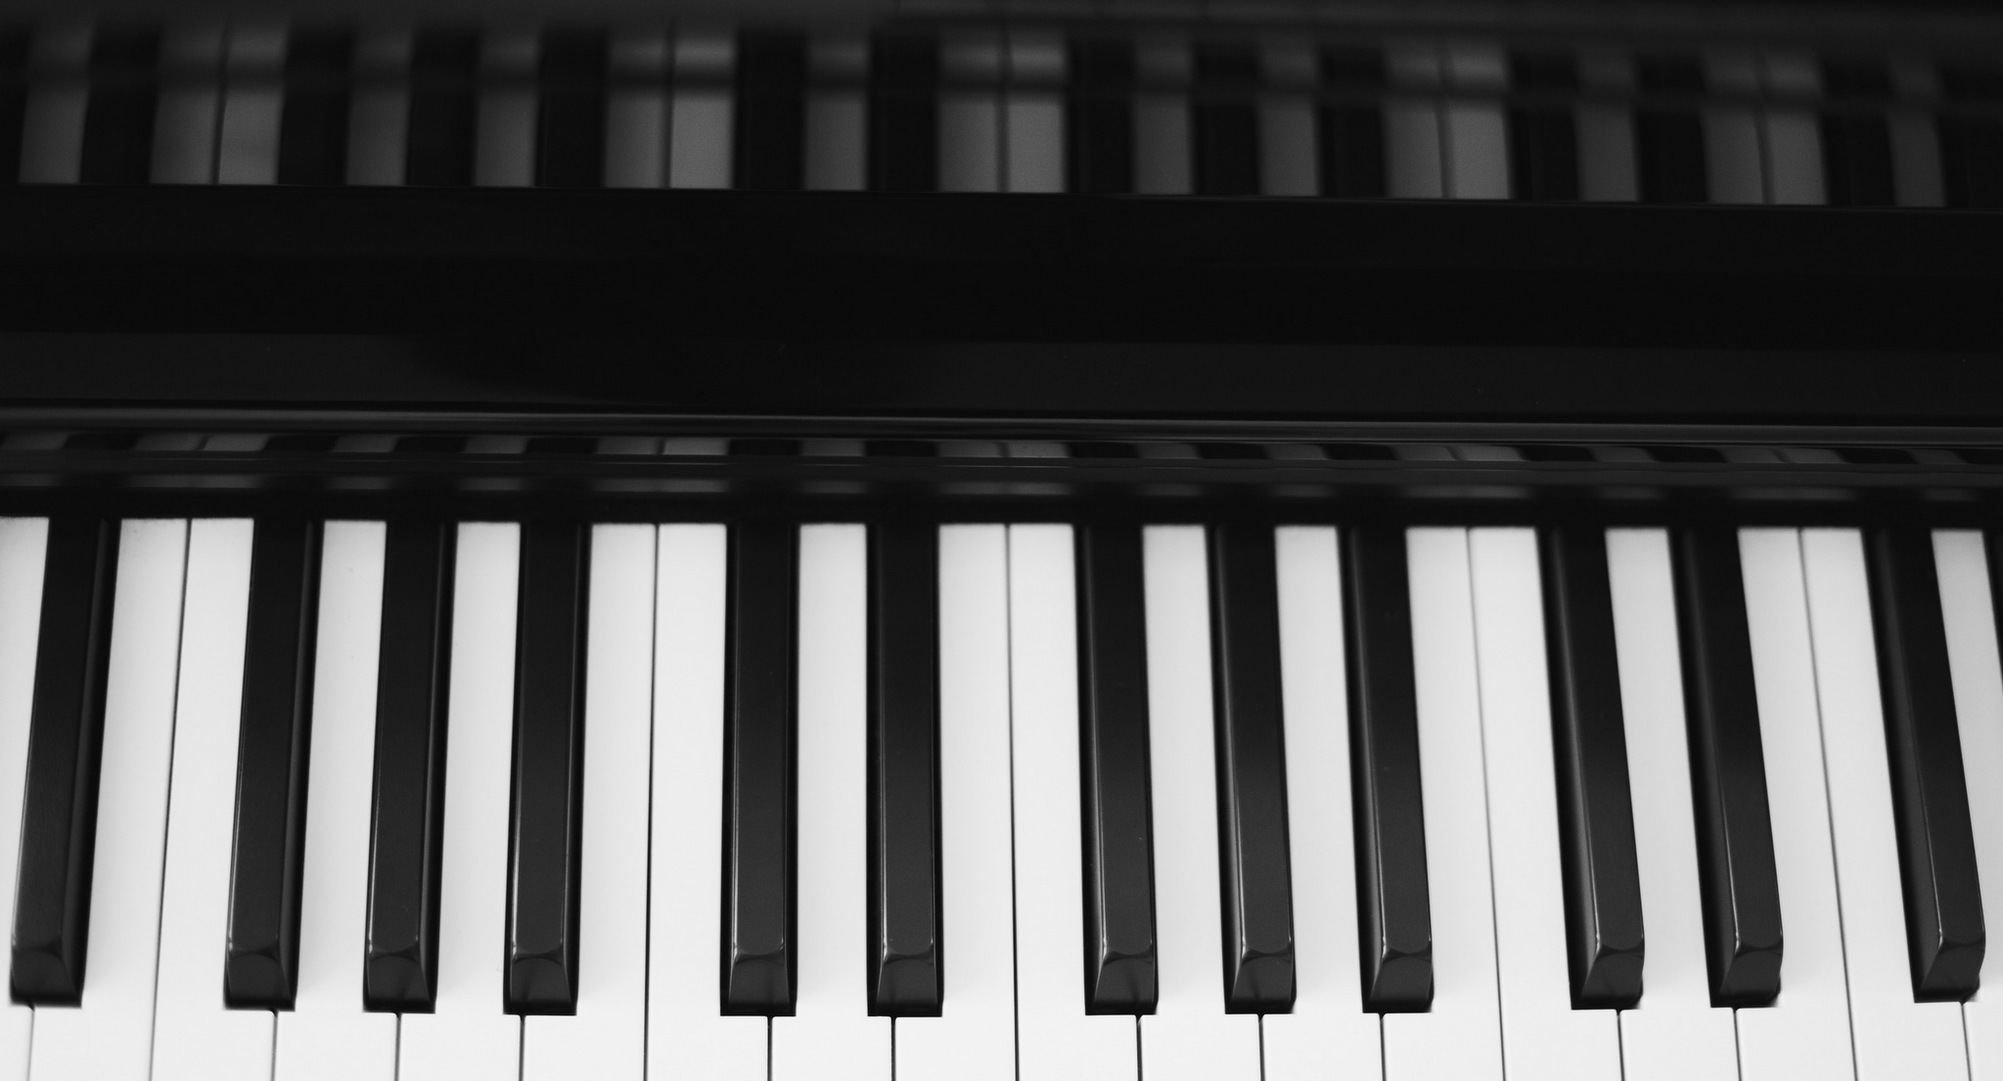 piano keyboard (black and white)